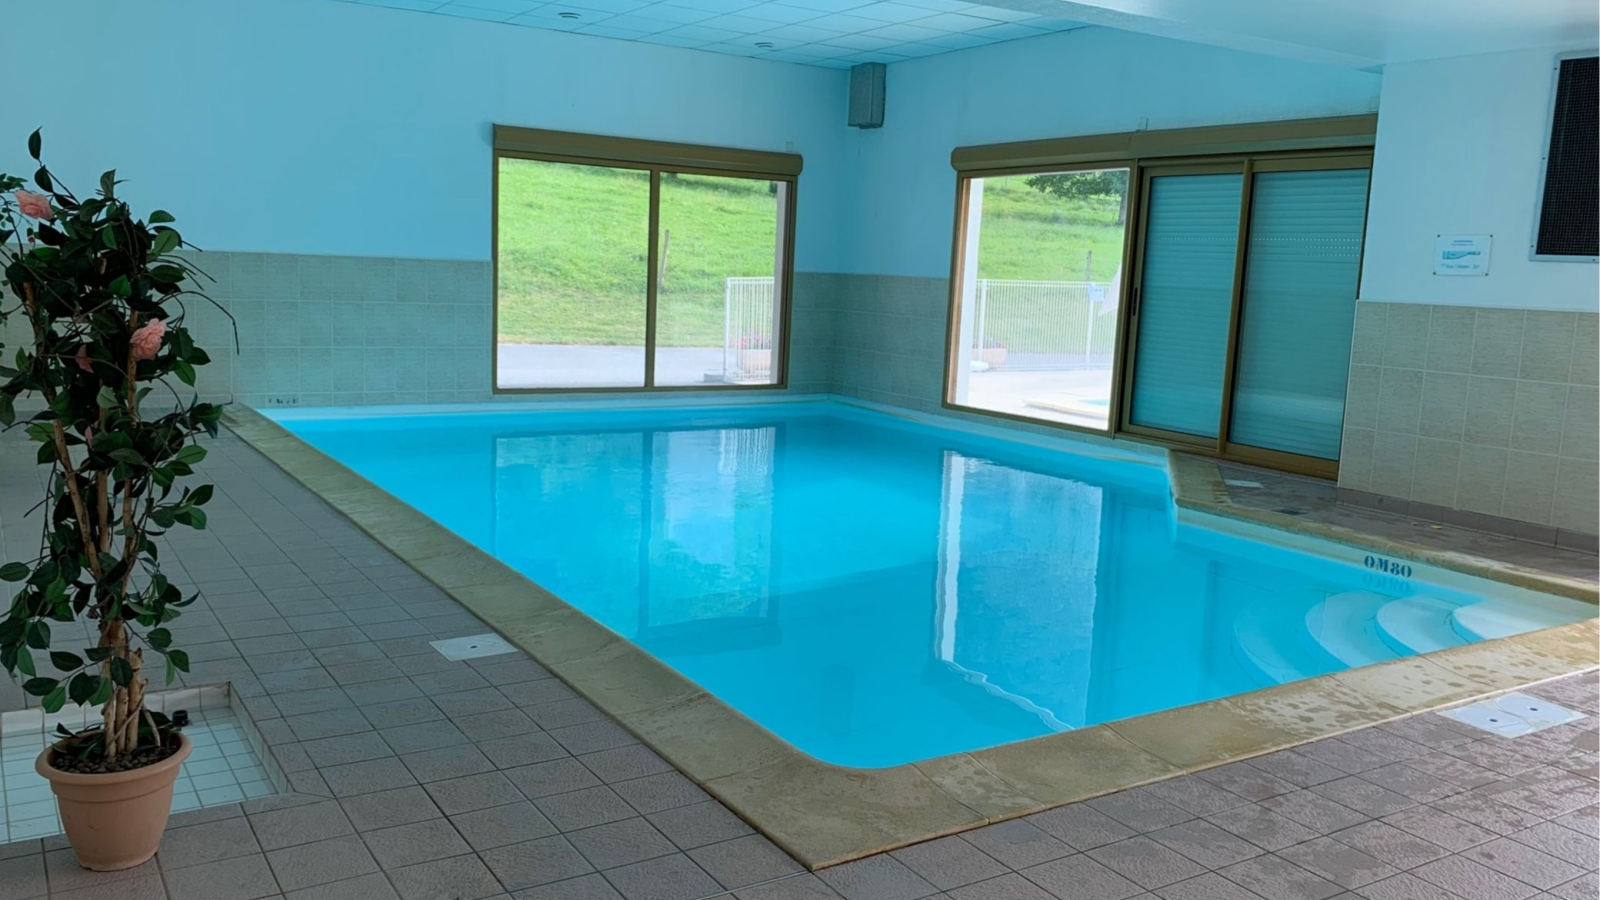 indoors swimming pool